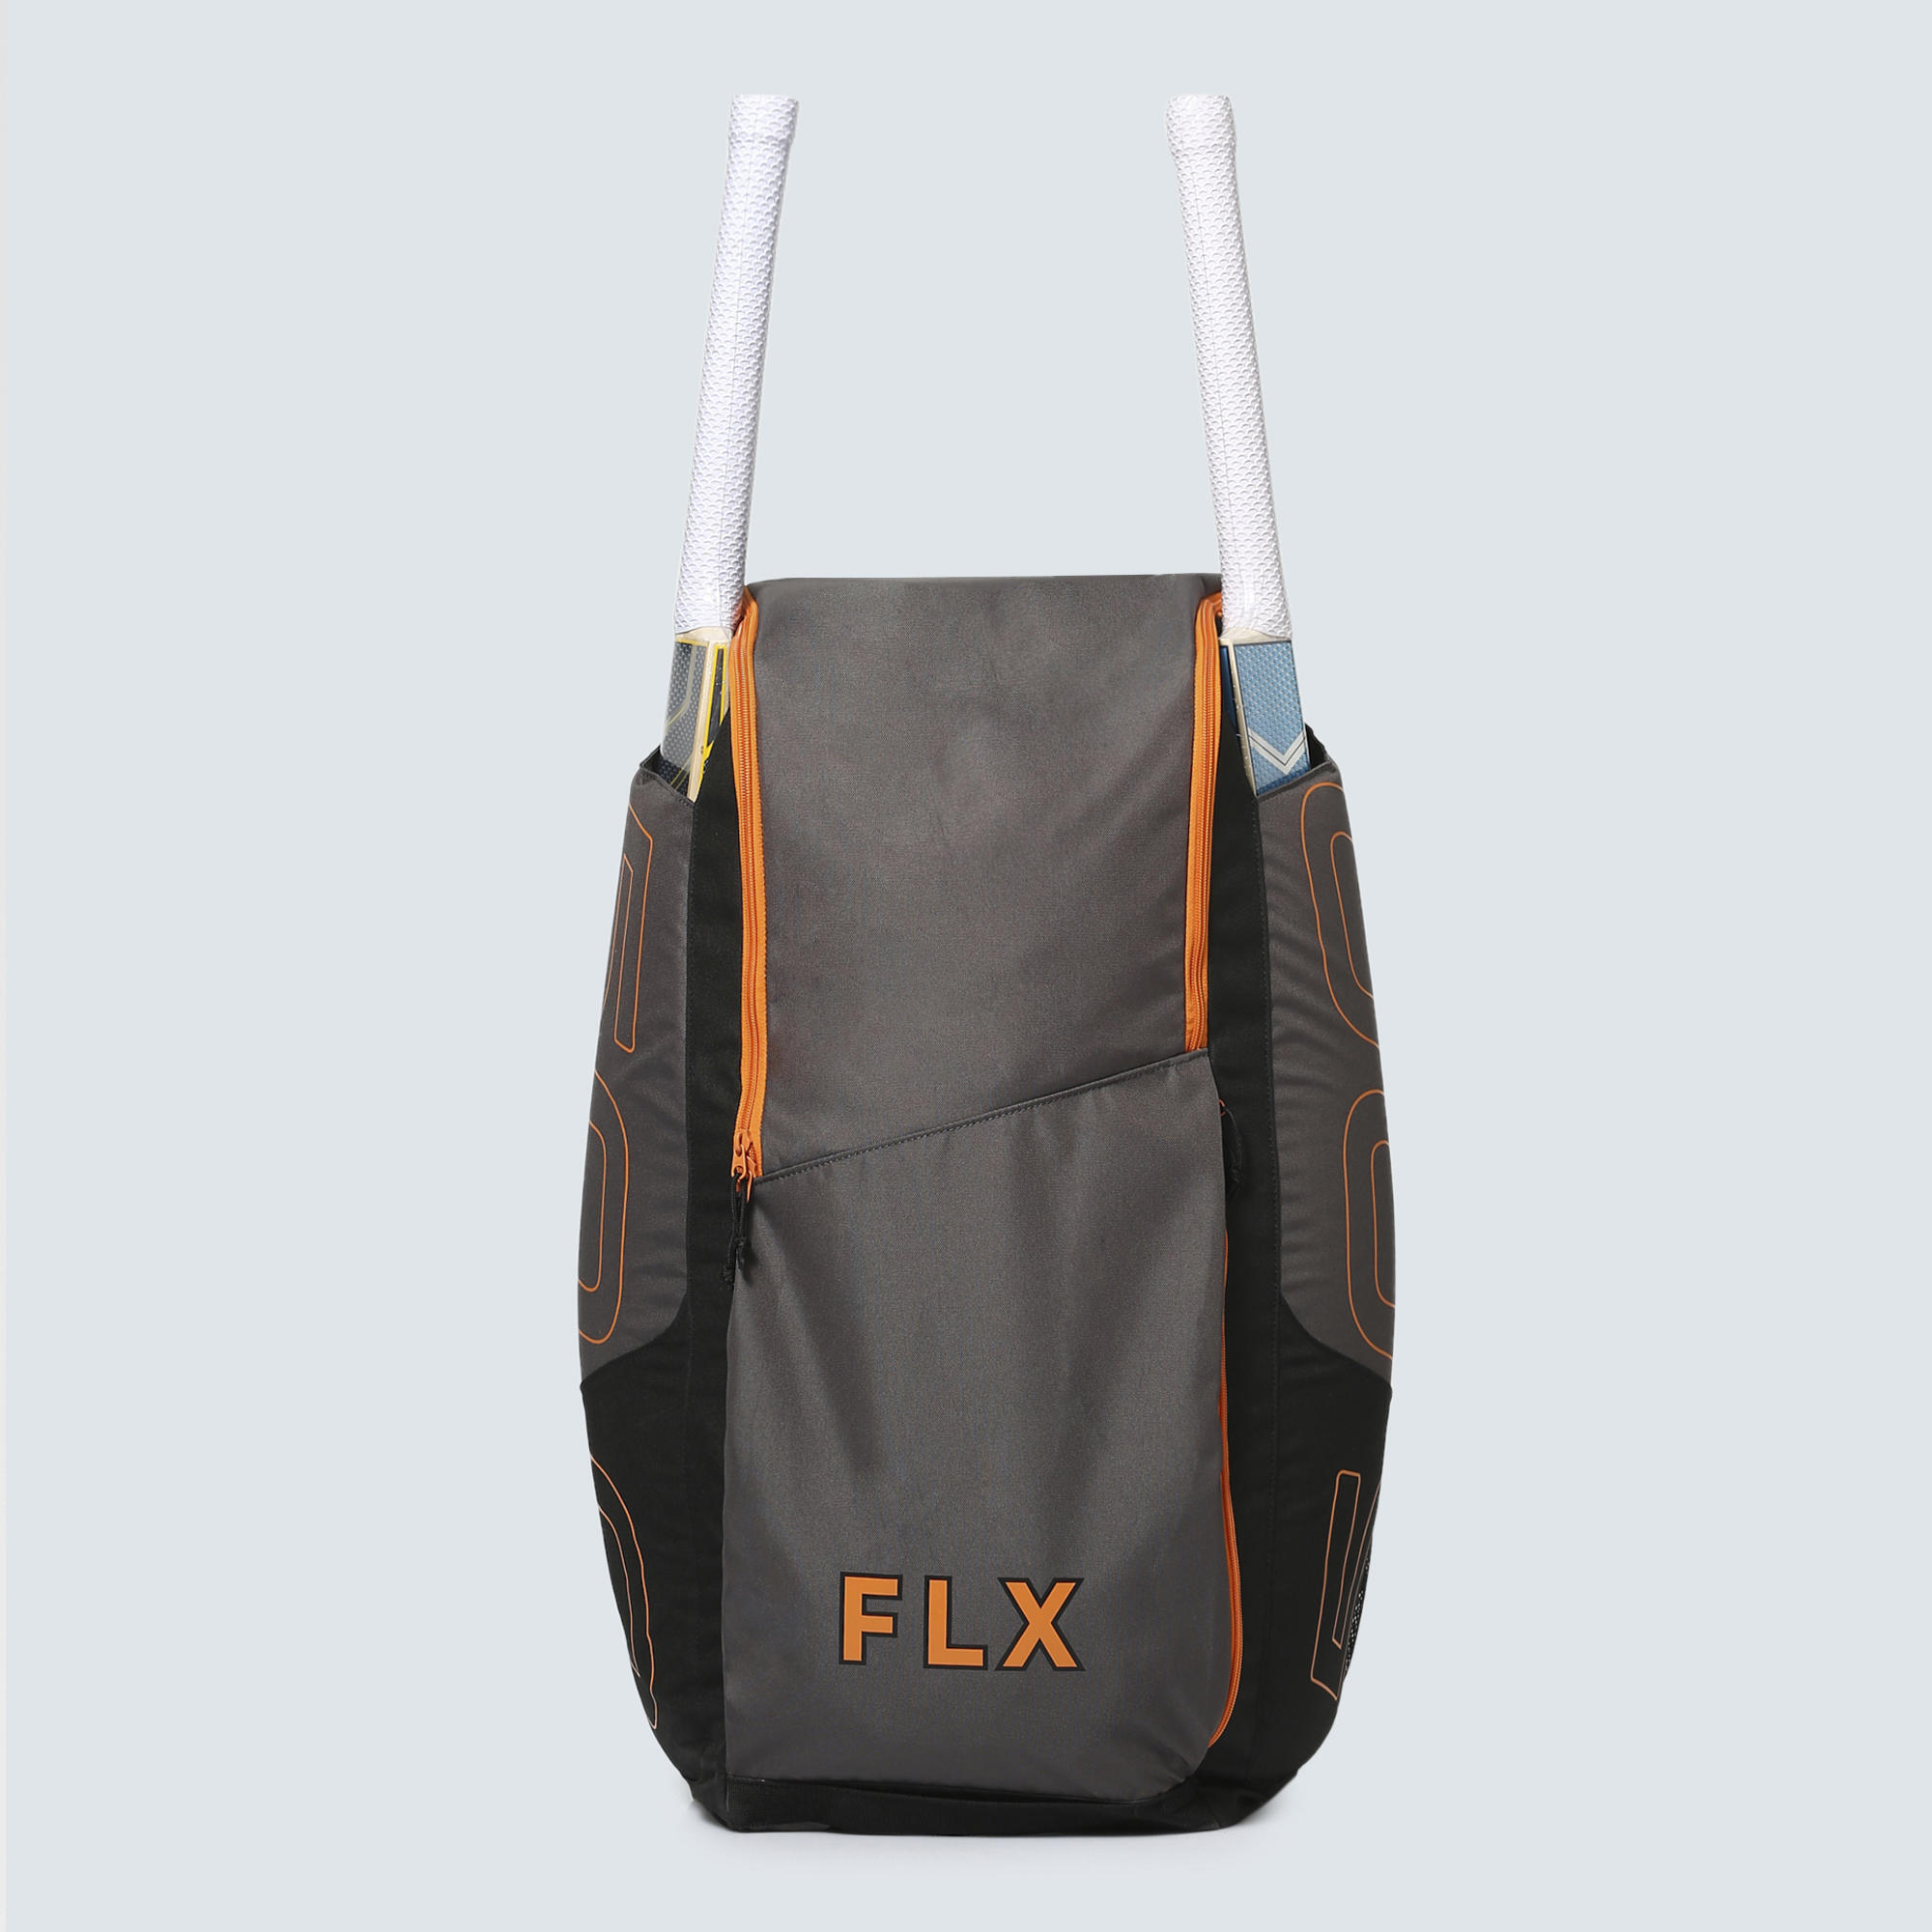 FLX 75 L CRICKET KIT BAG